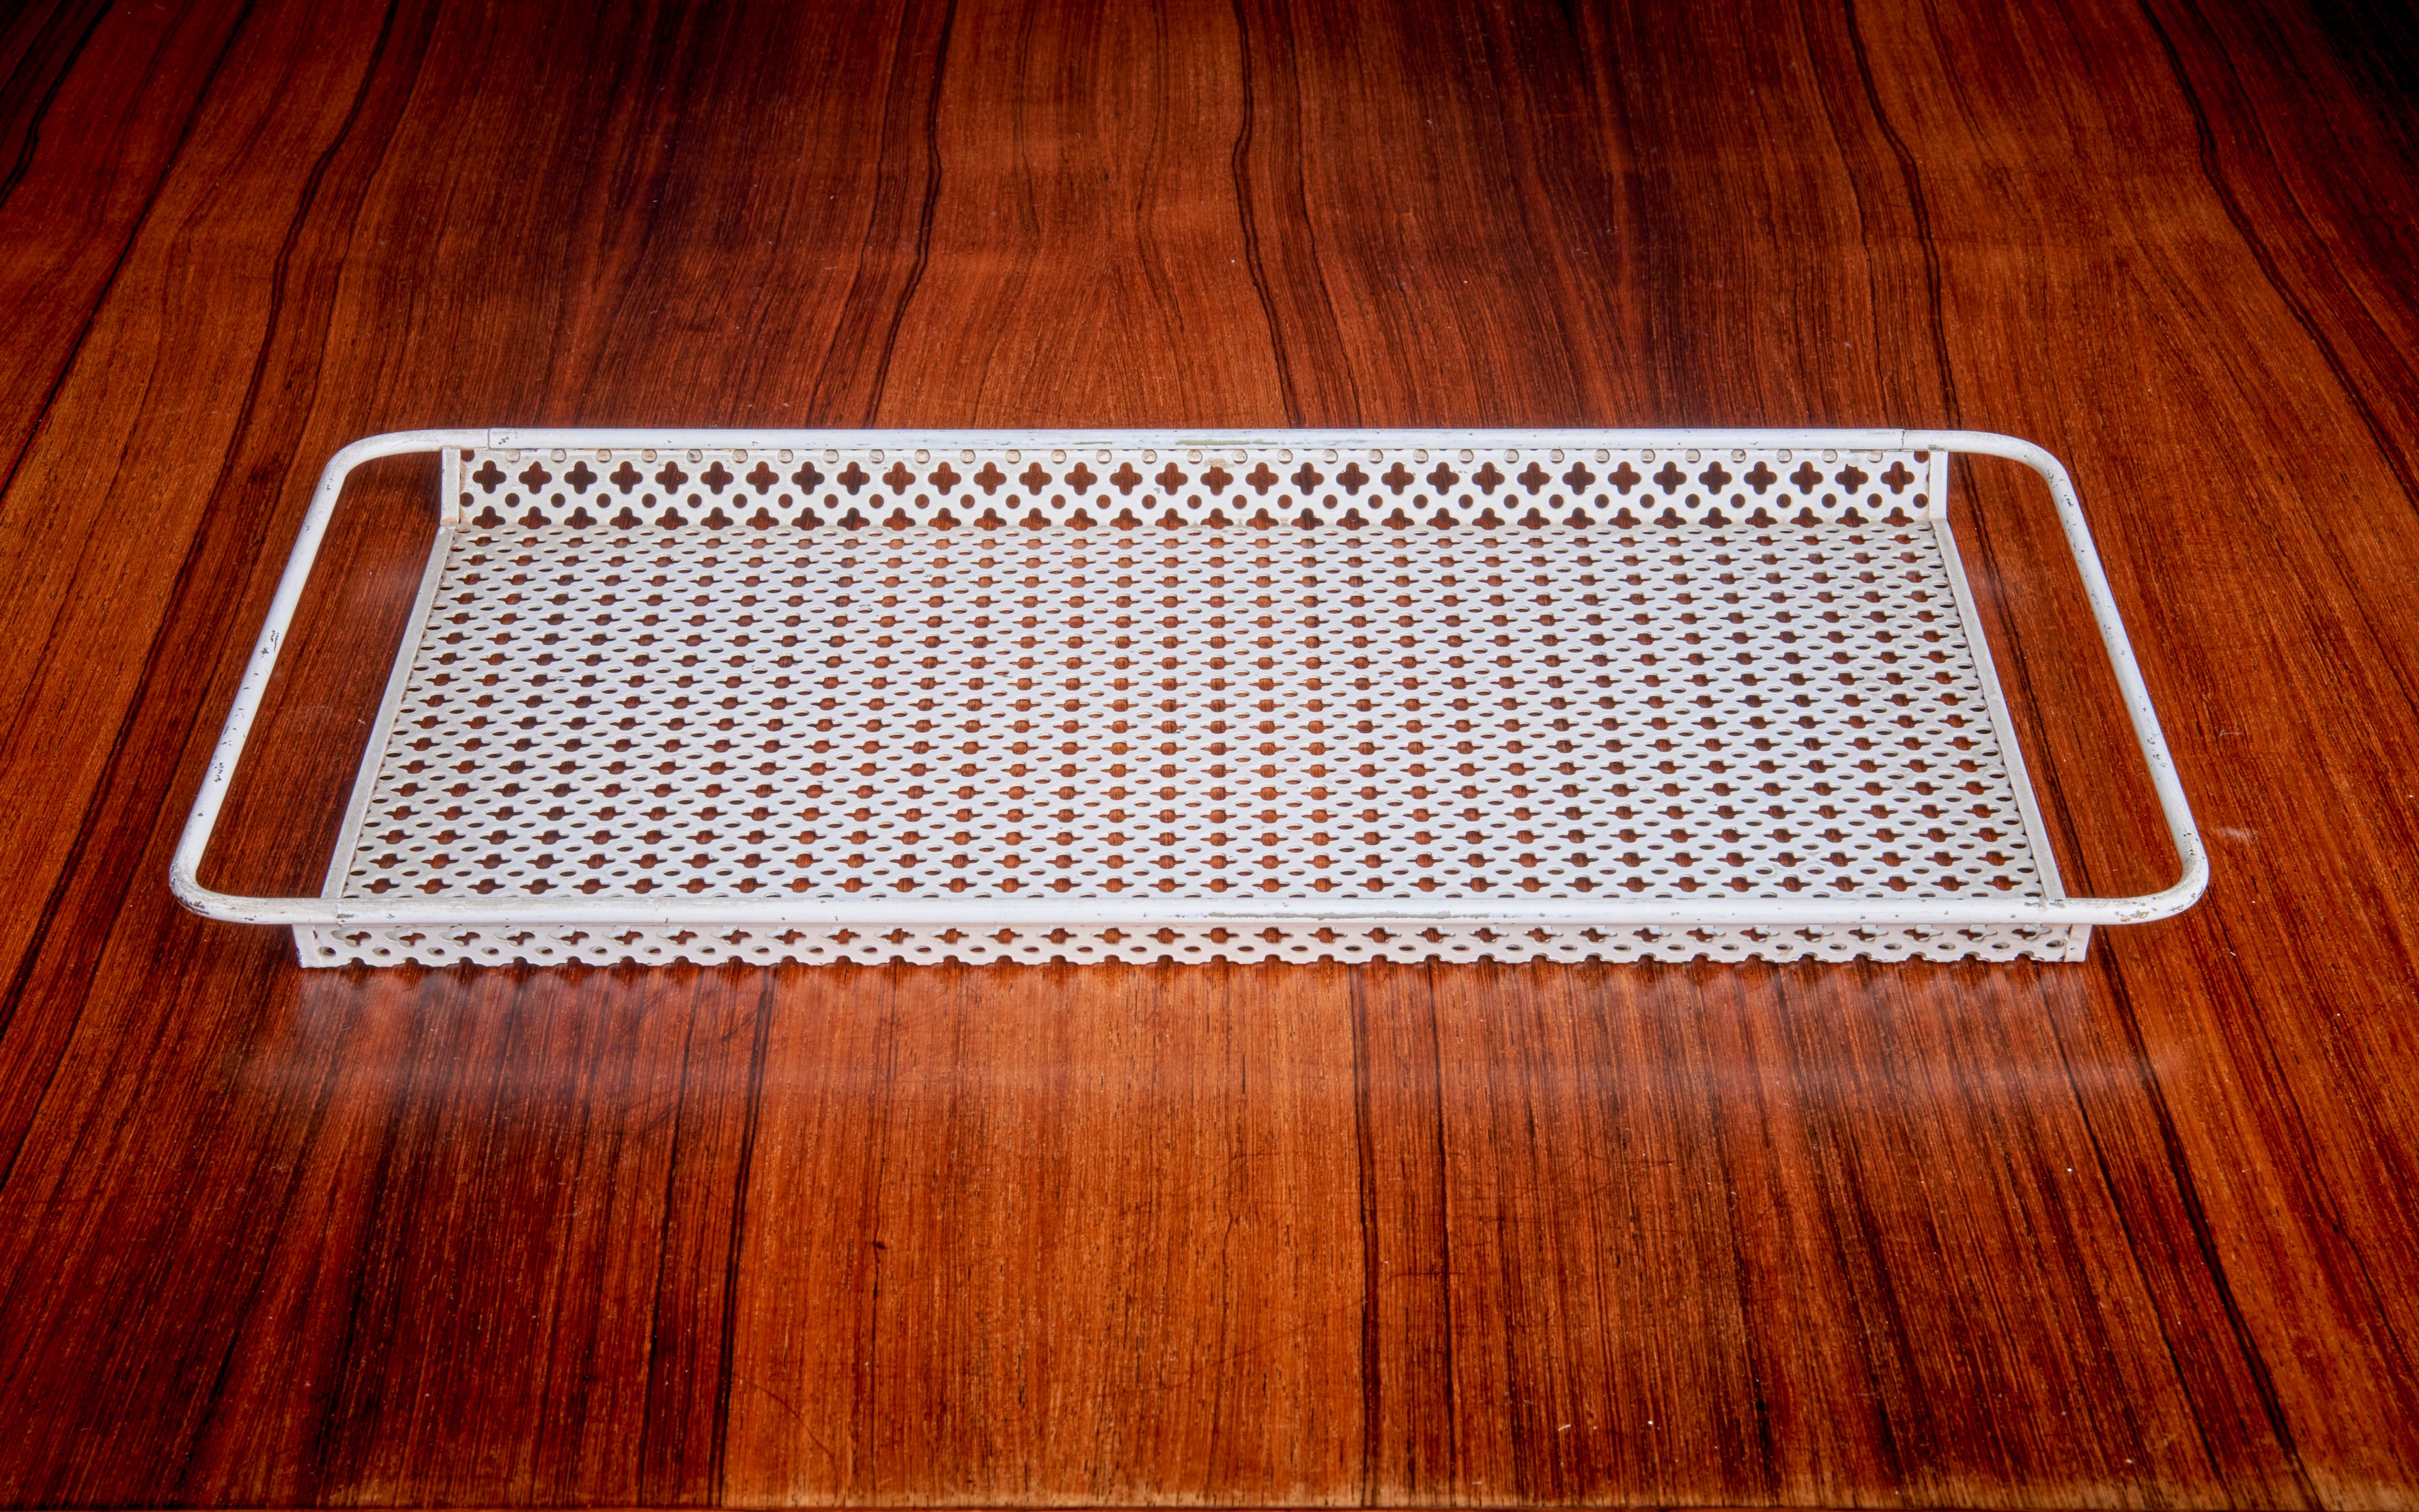 Tray by Mathieu Matégot in perforated metal sheet.

